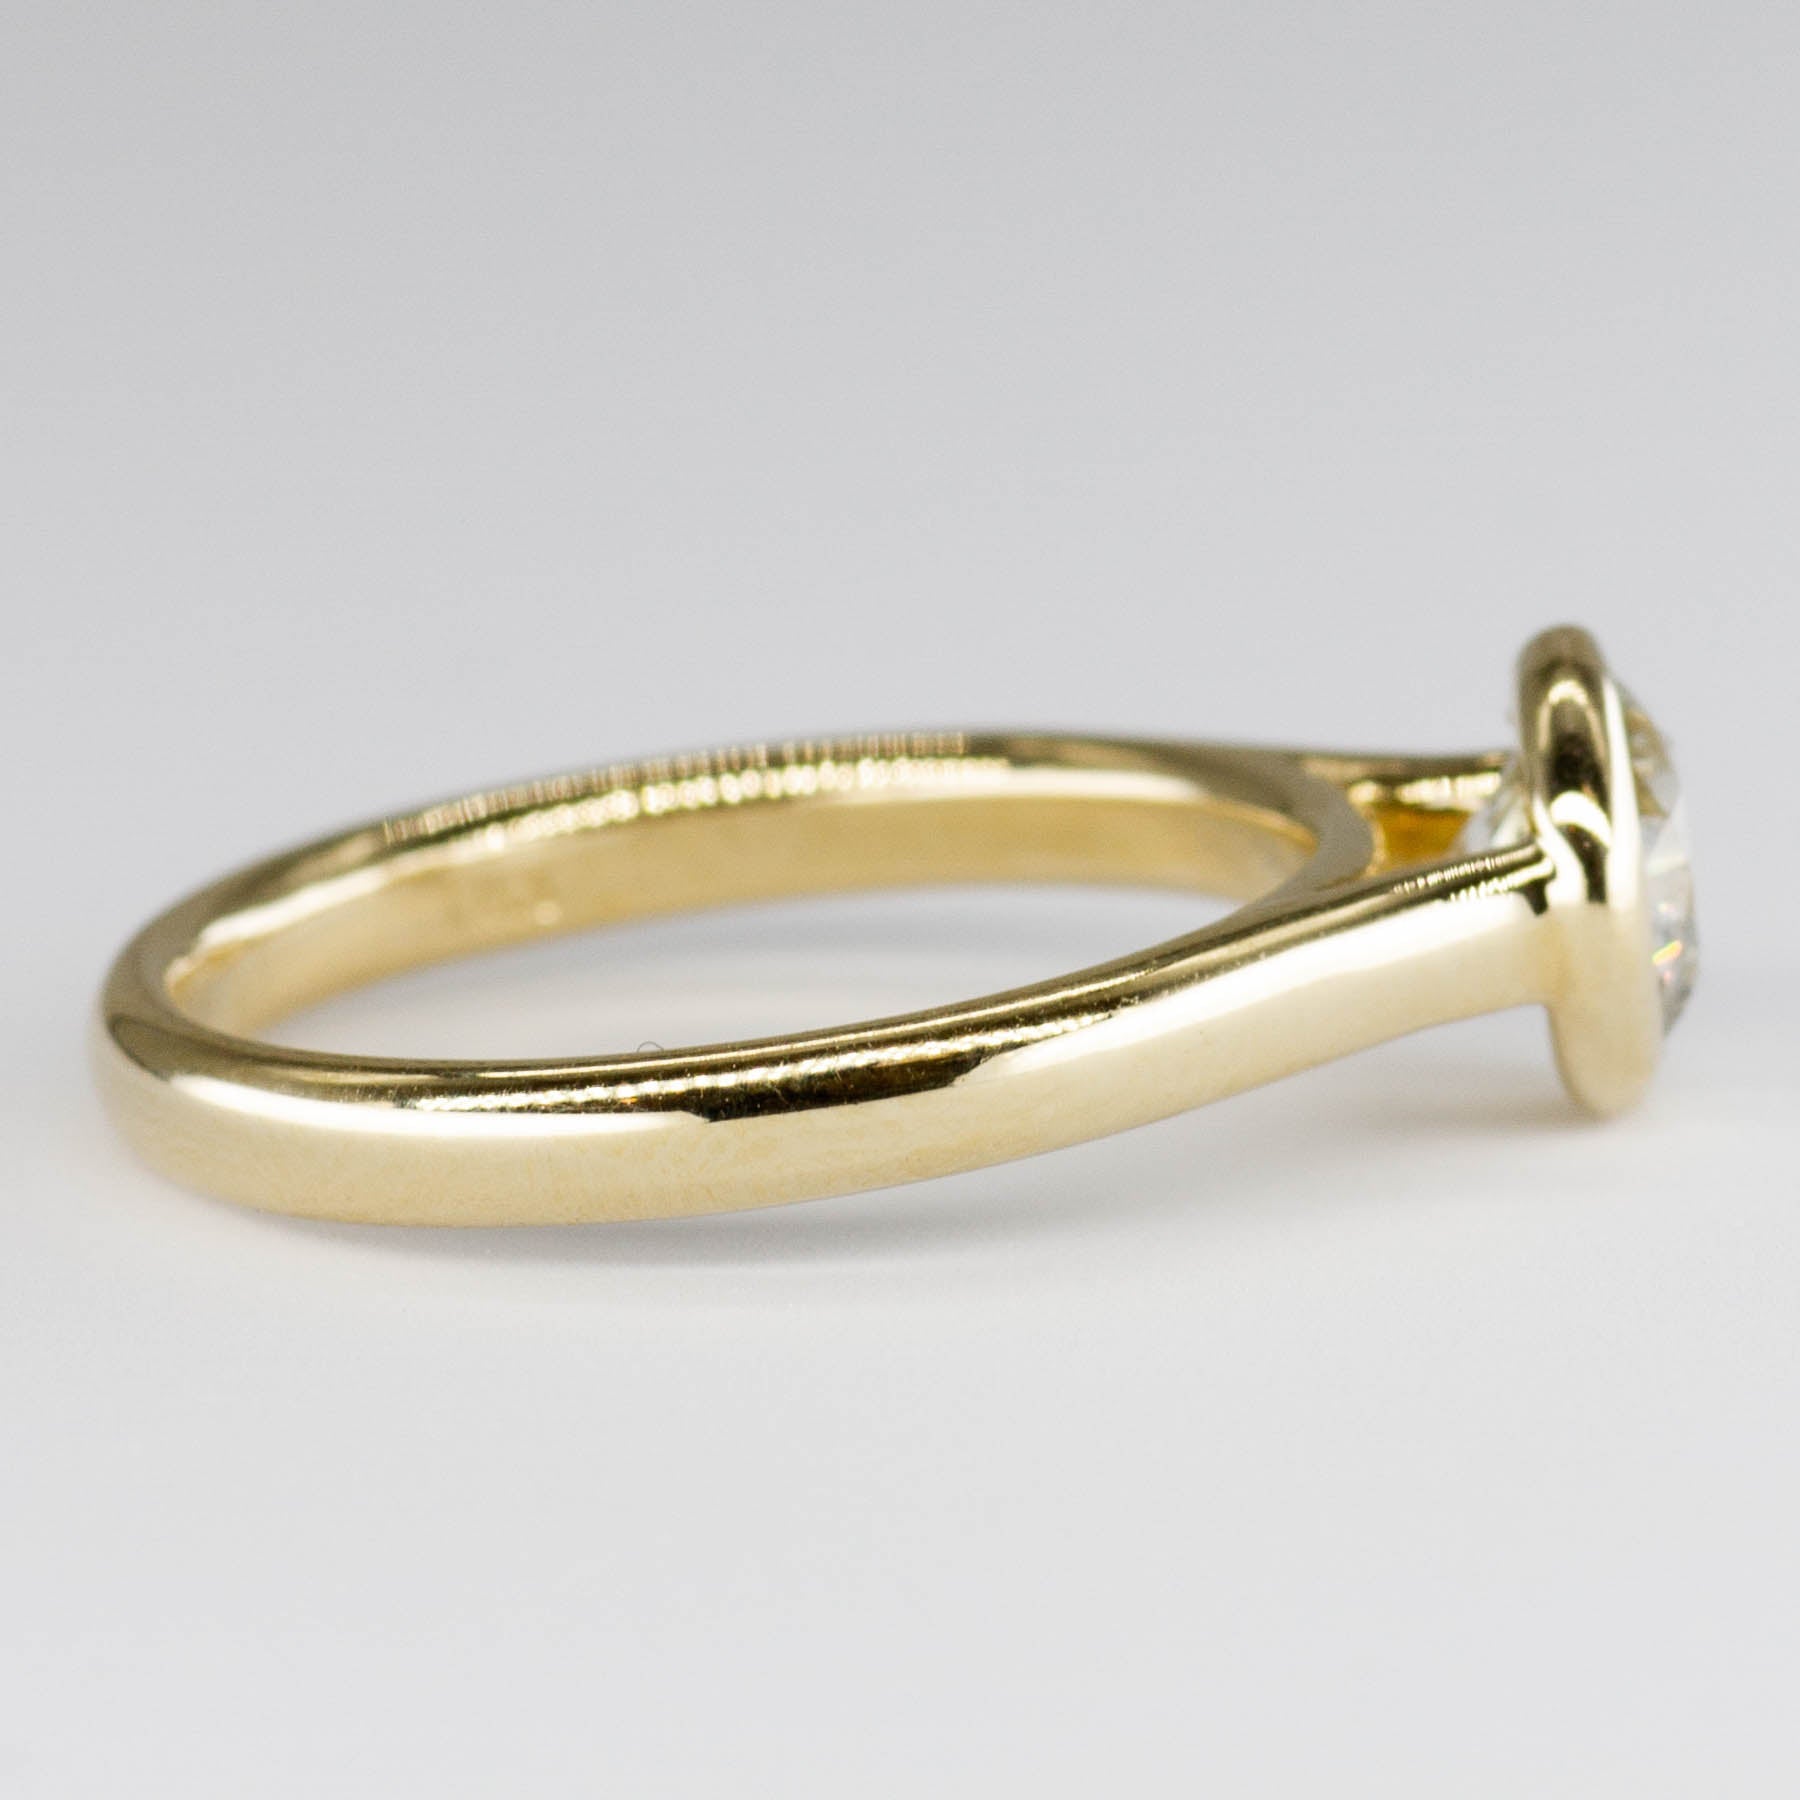 '100 Ways' 14k Yellow Gold Bezel Set Solitaire Ring | 1.01ct | SZ 6.75 - 100 Ways